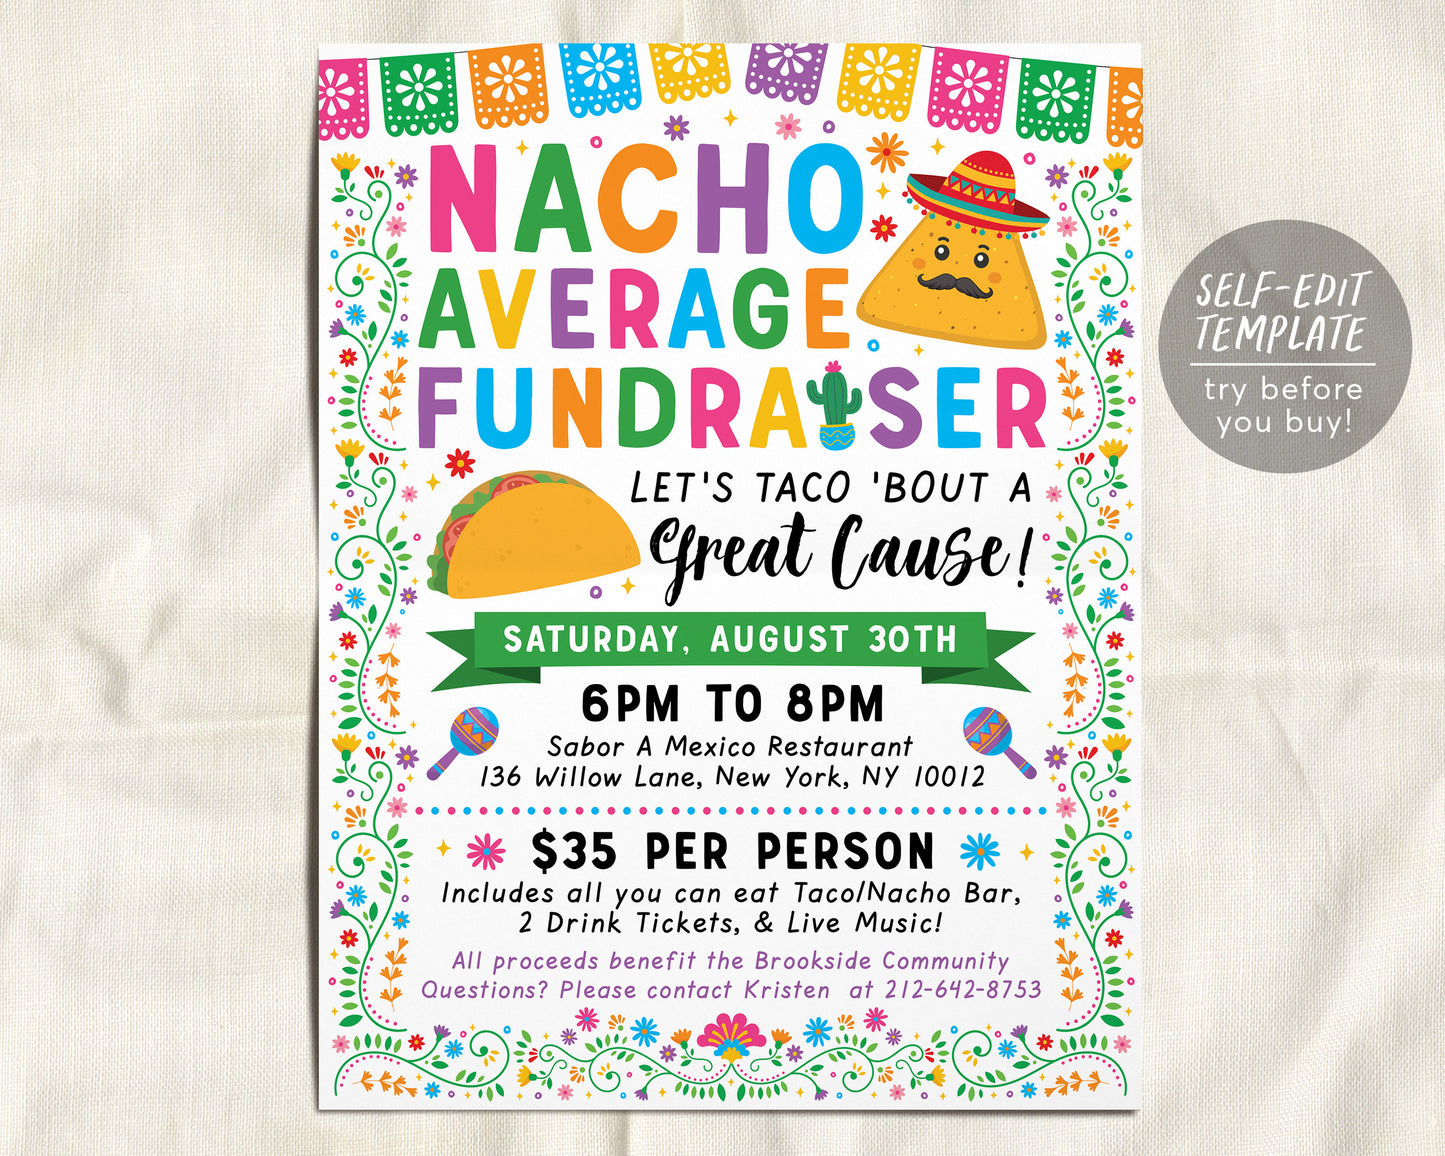 Fiesta Mexican Fundraiser Flyer Editable Template, Taco Nacho Average Dinner Flyer Charity, Church Community PTO PTA School Benefit Event